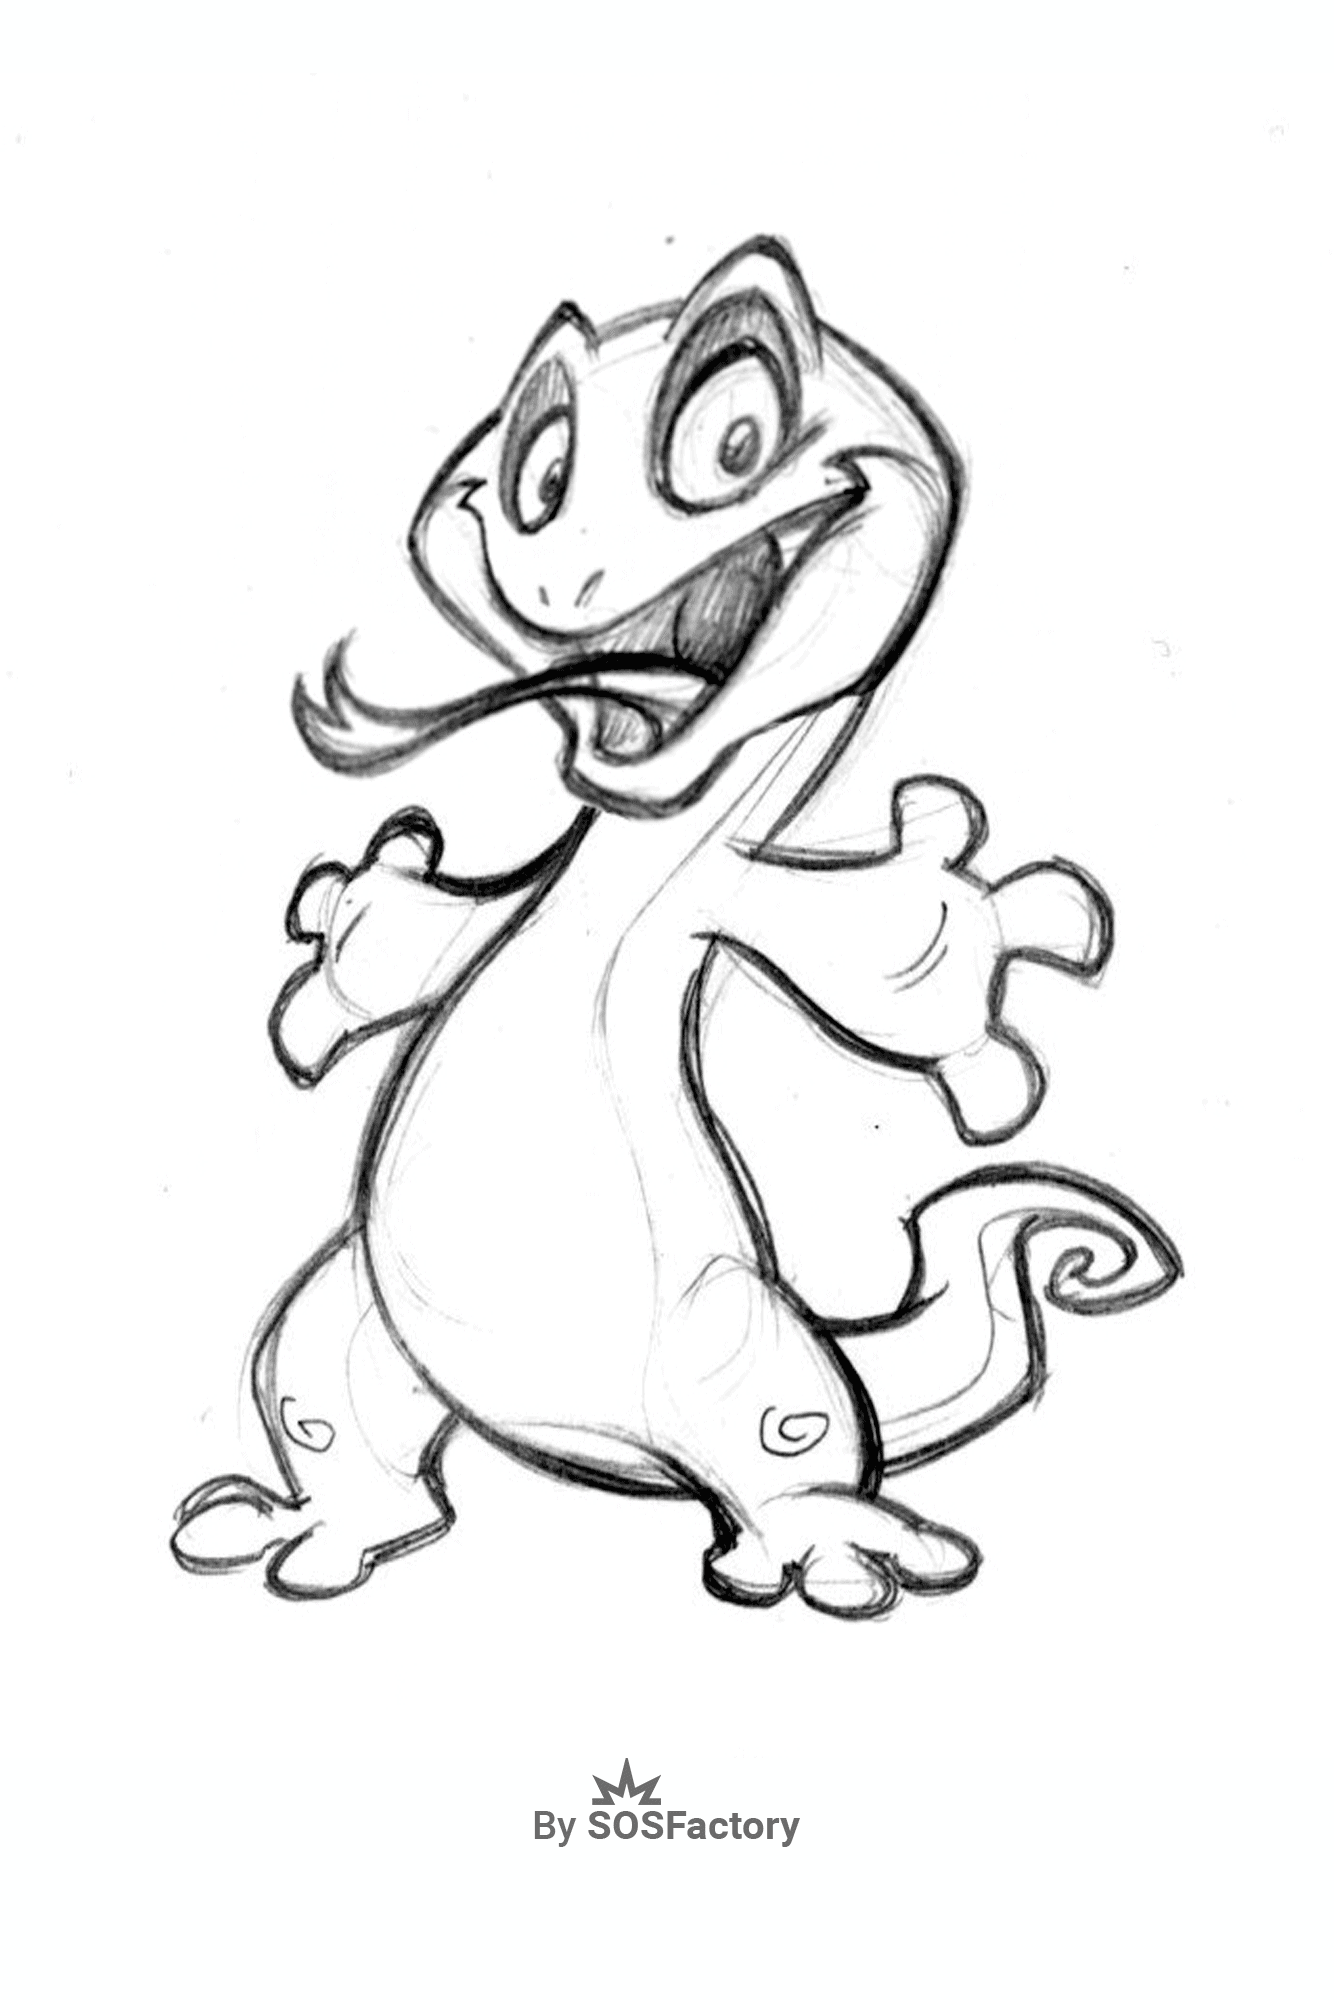 Lizard cartoon character